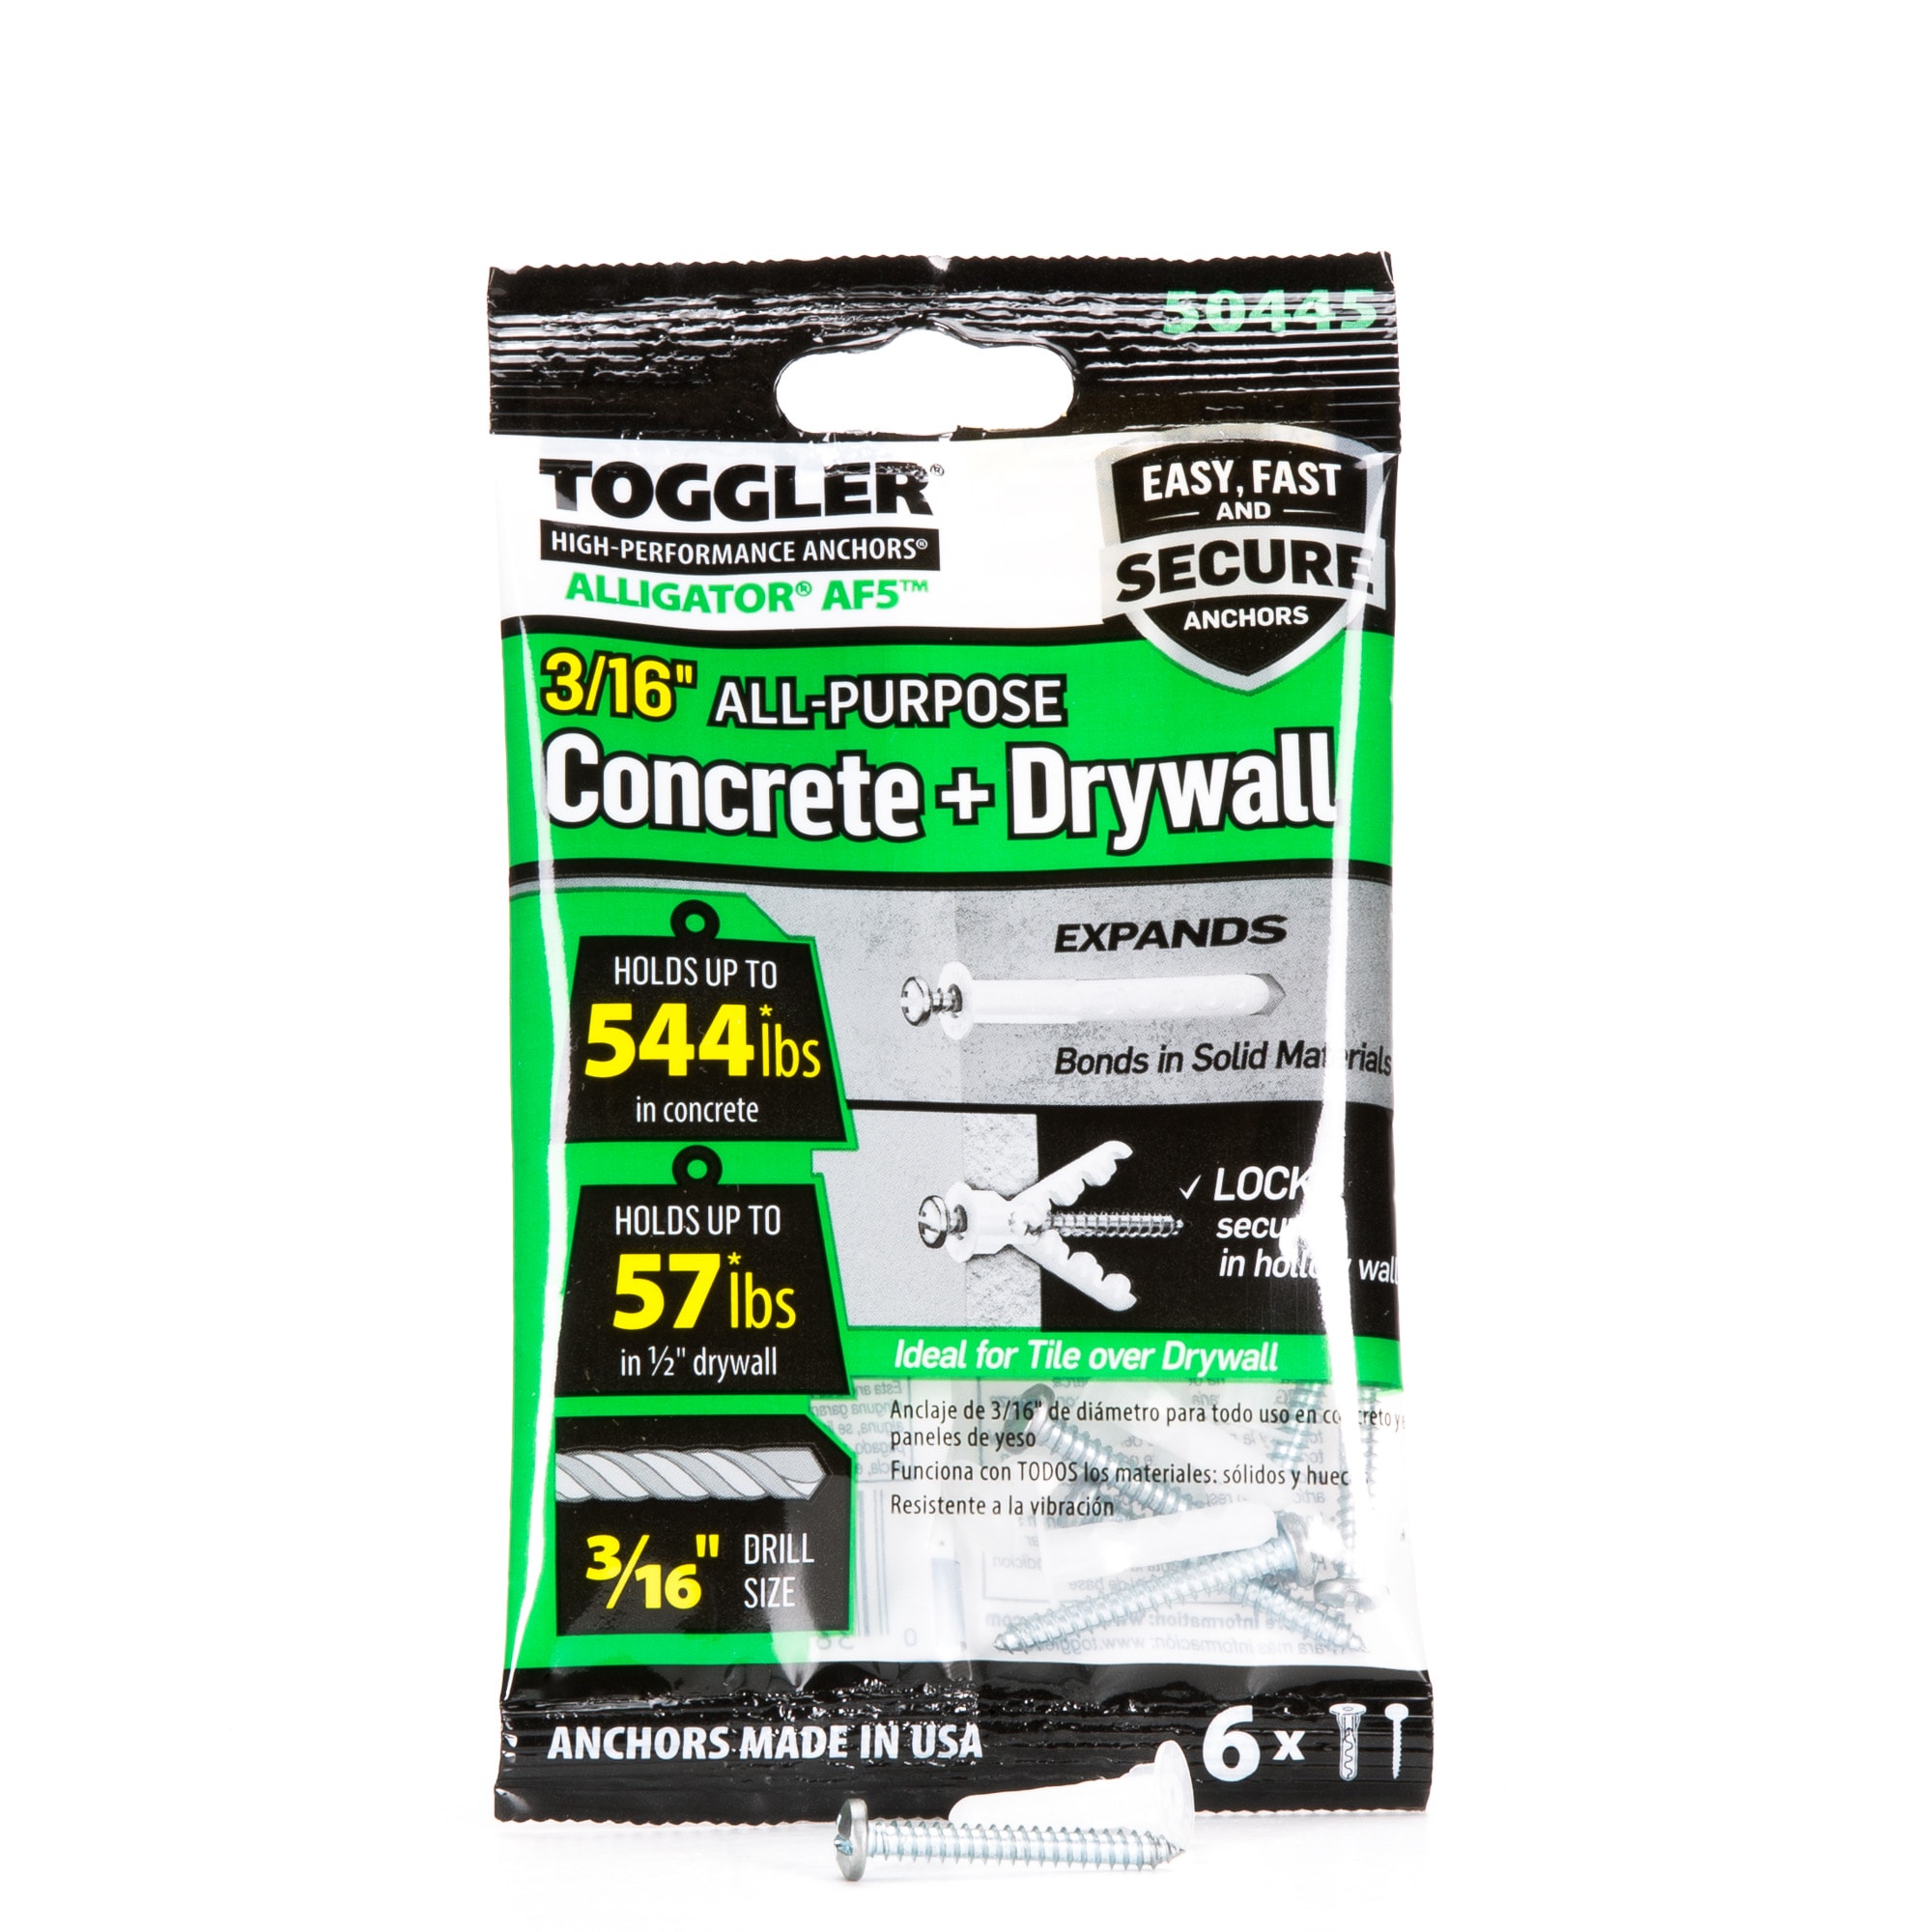 Toggler 12-Pack Wall Anchors AF8 Alligator 5/16 Concrete + Drywall #50490  (C58)